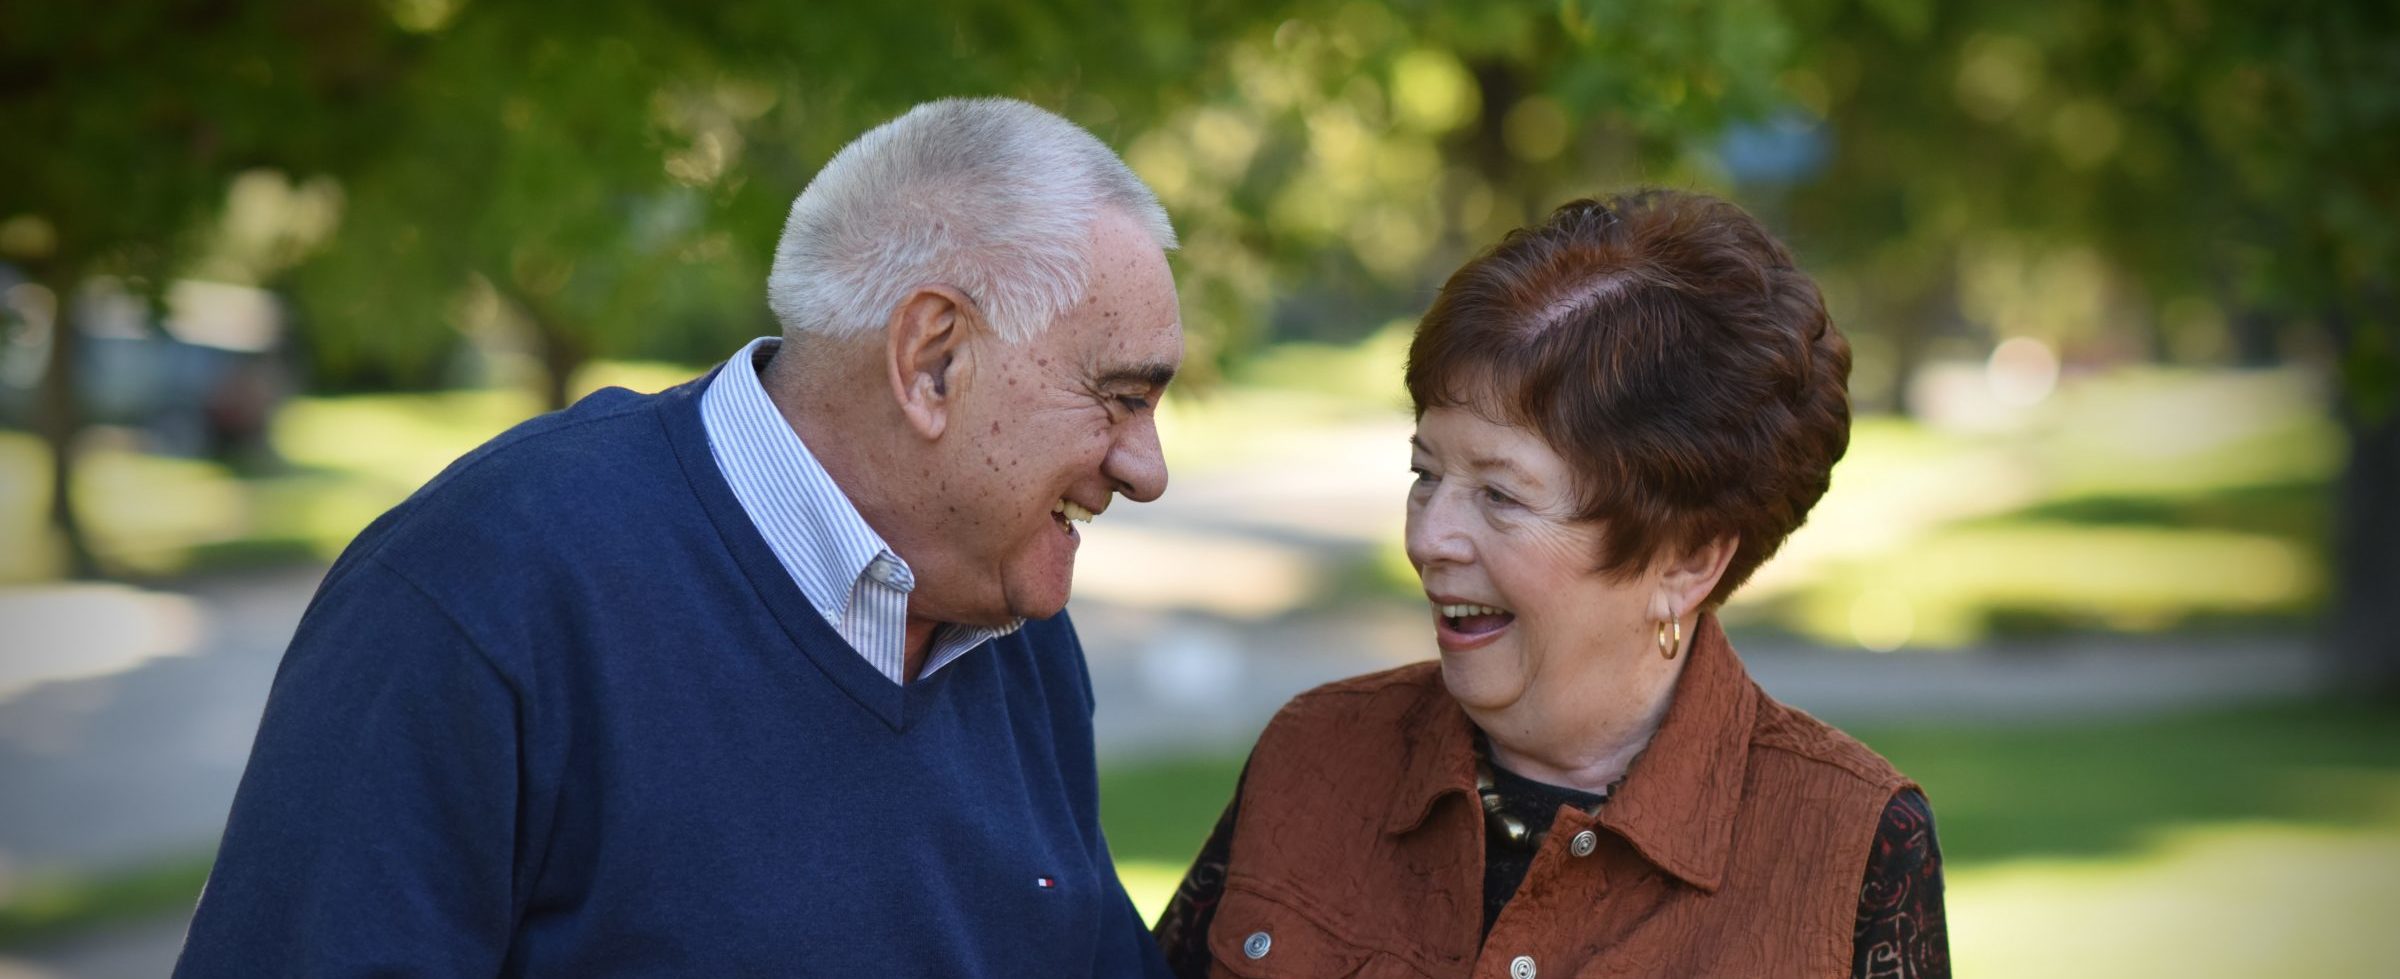 elderly man and woman talking